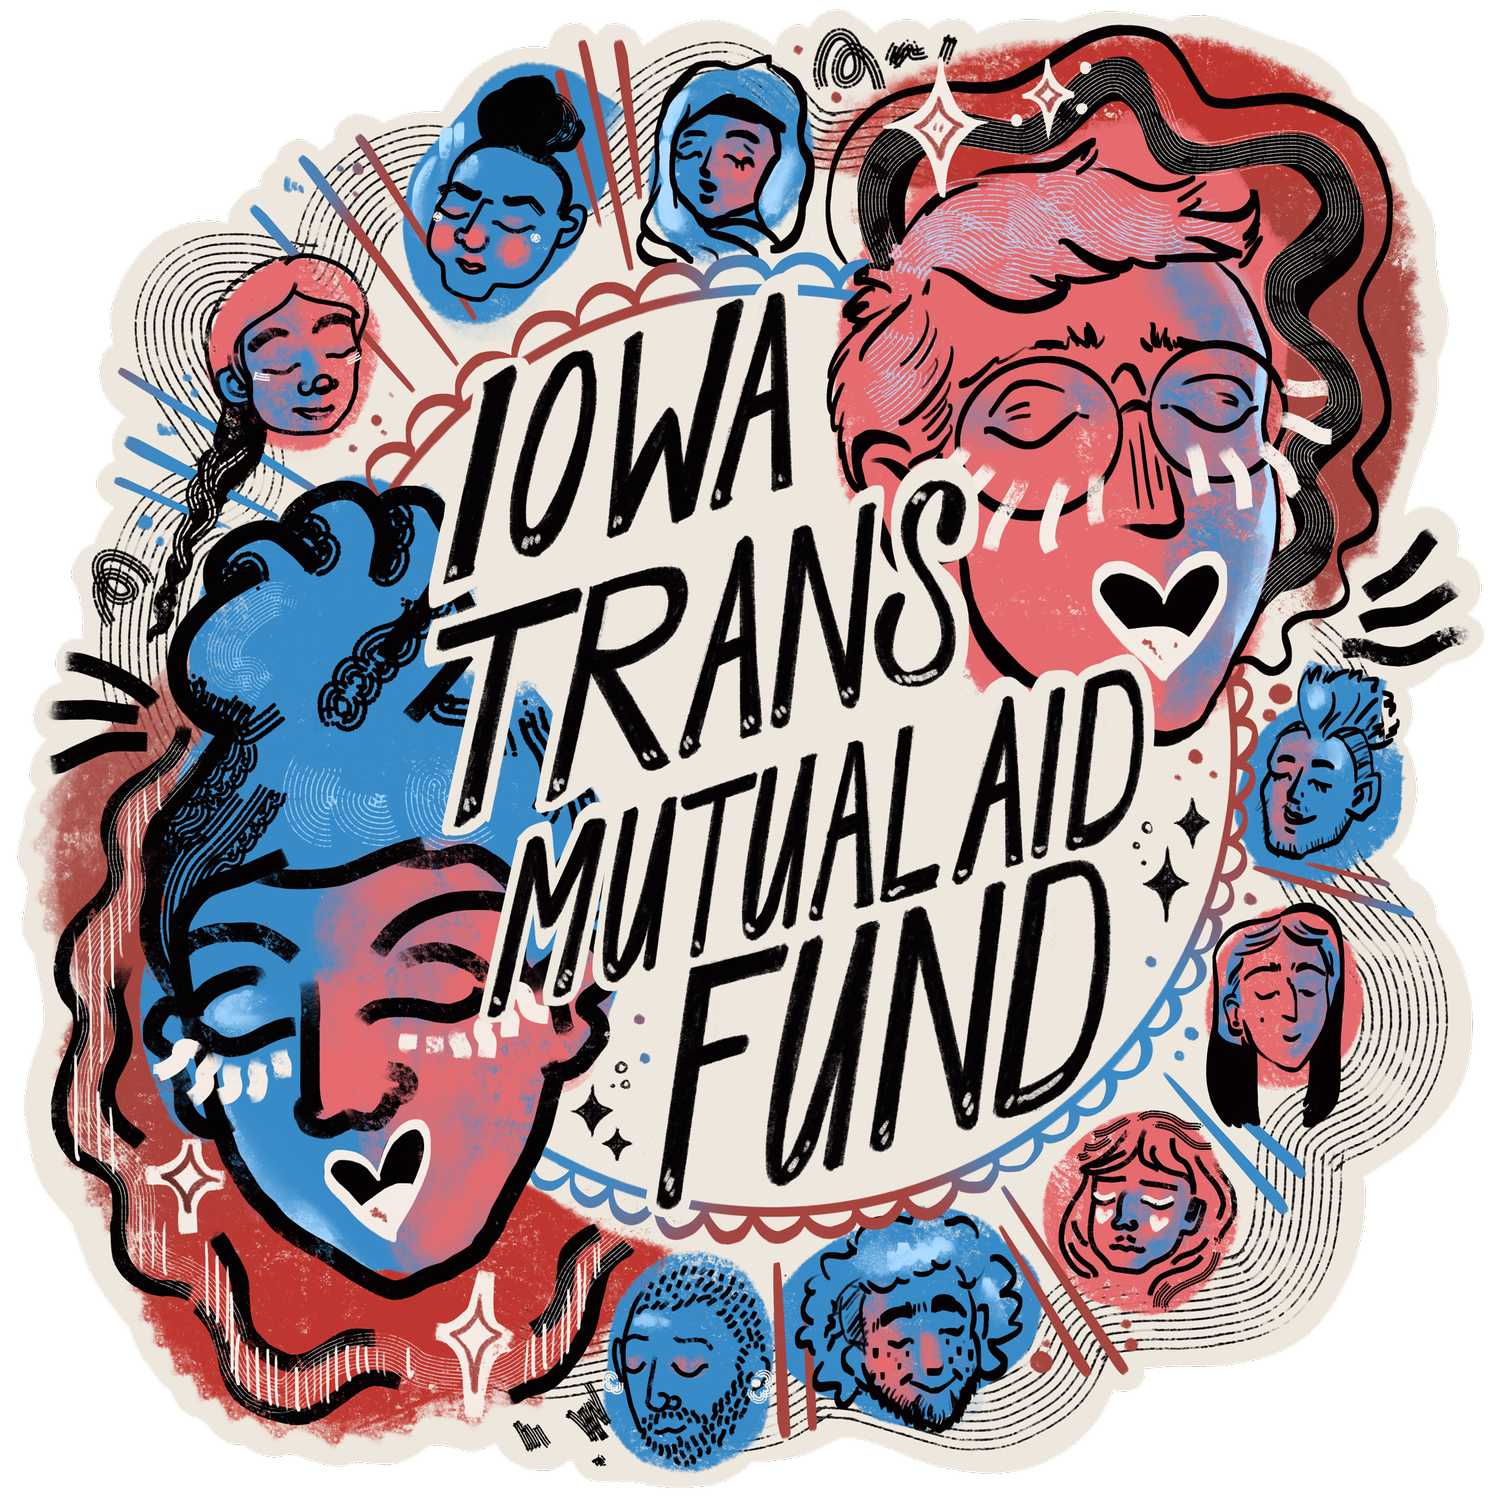 Iowa Trans Mutual Aid Fund 